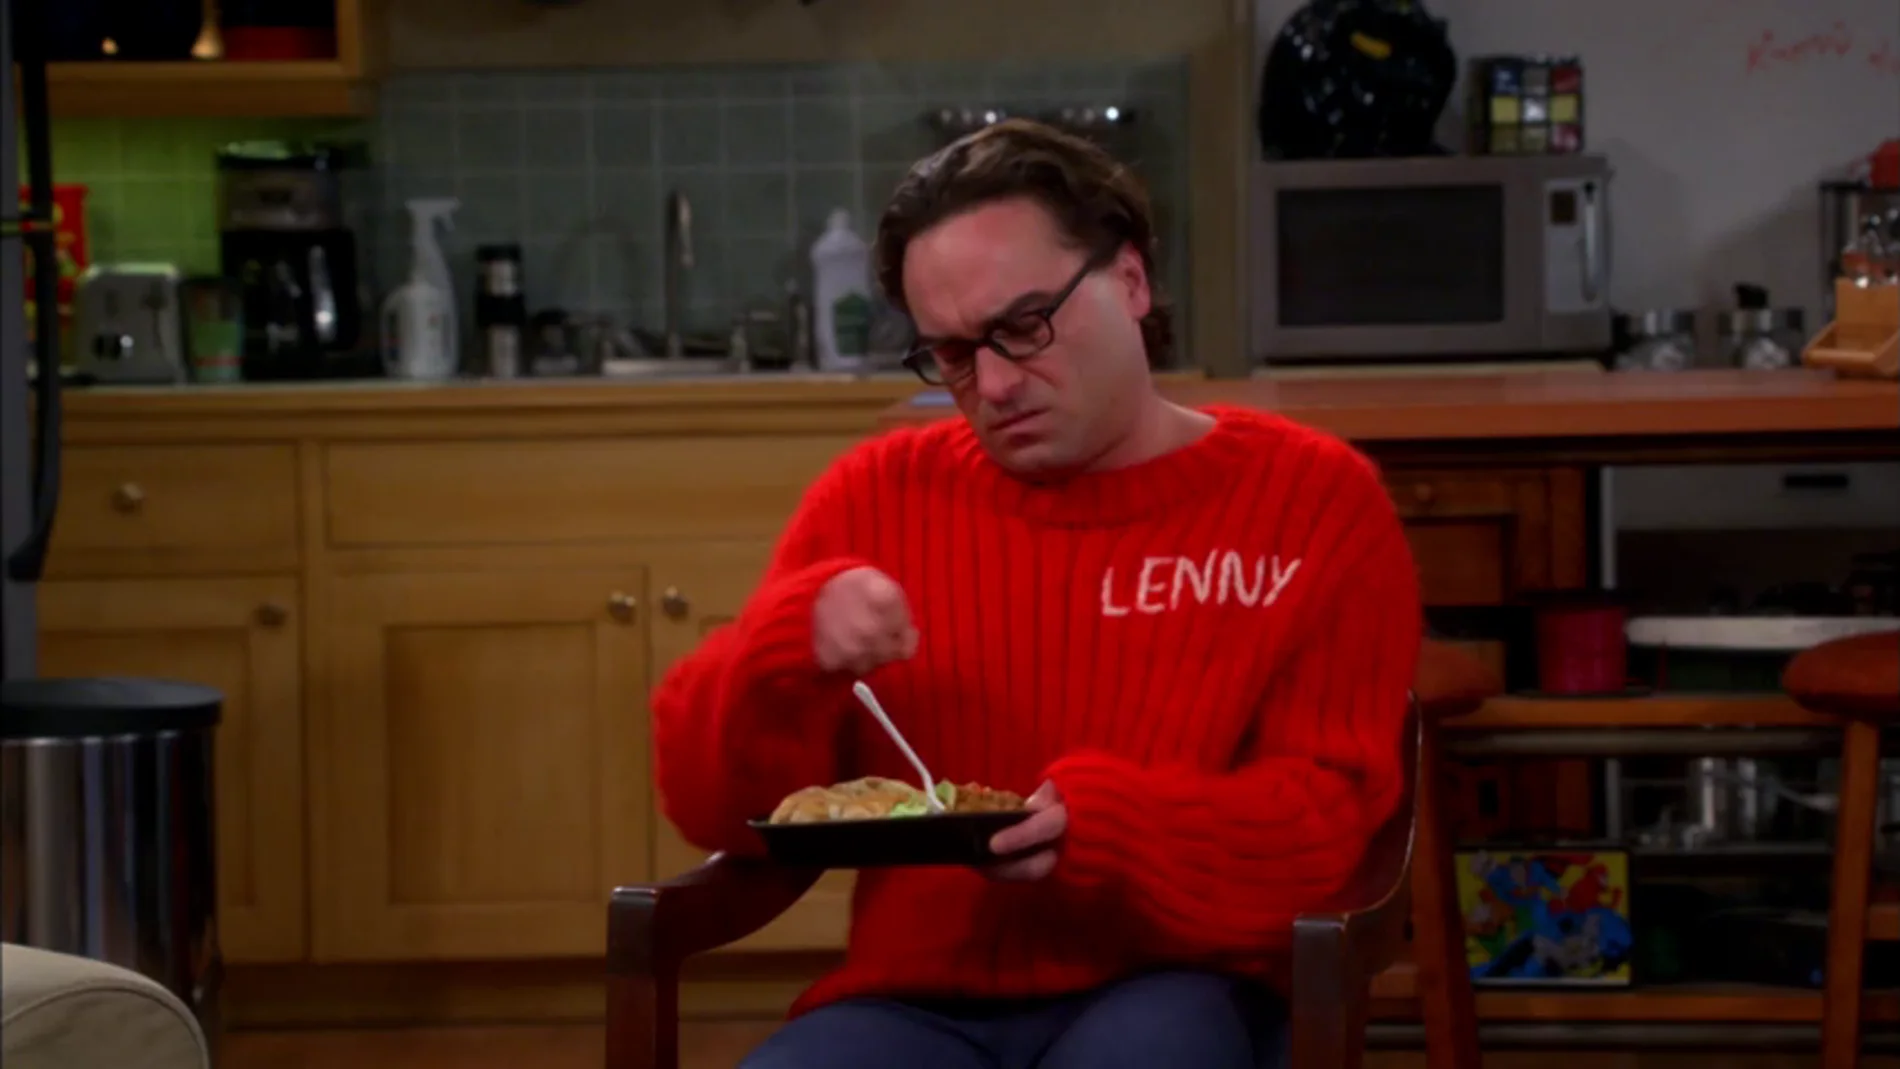 "Demostraré a Sheldon que puedo solucionar un problema sin parecer pirado"